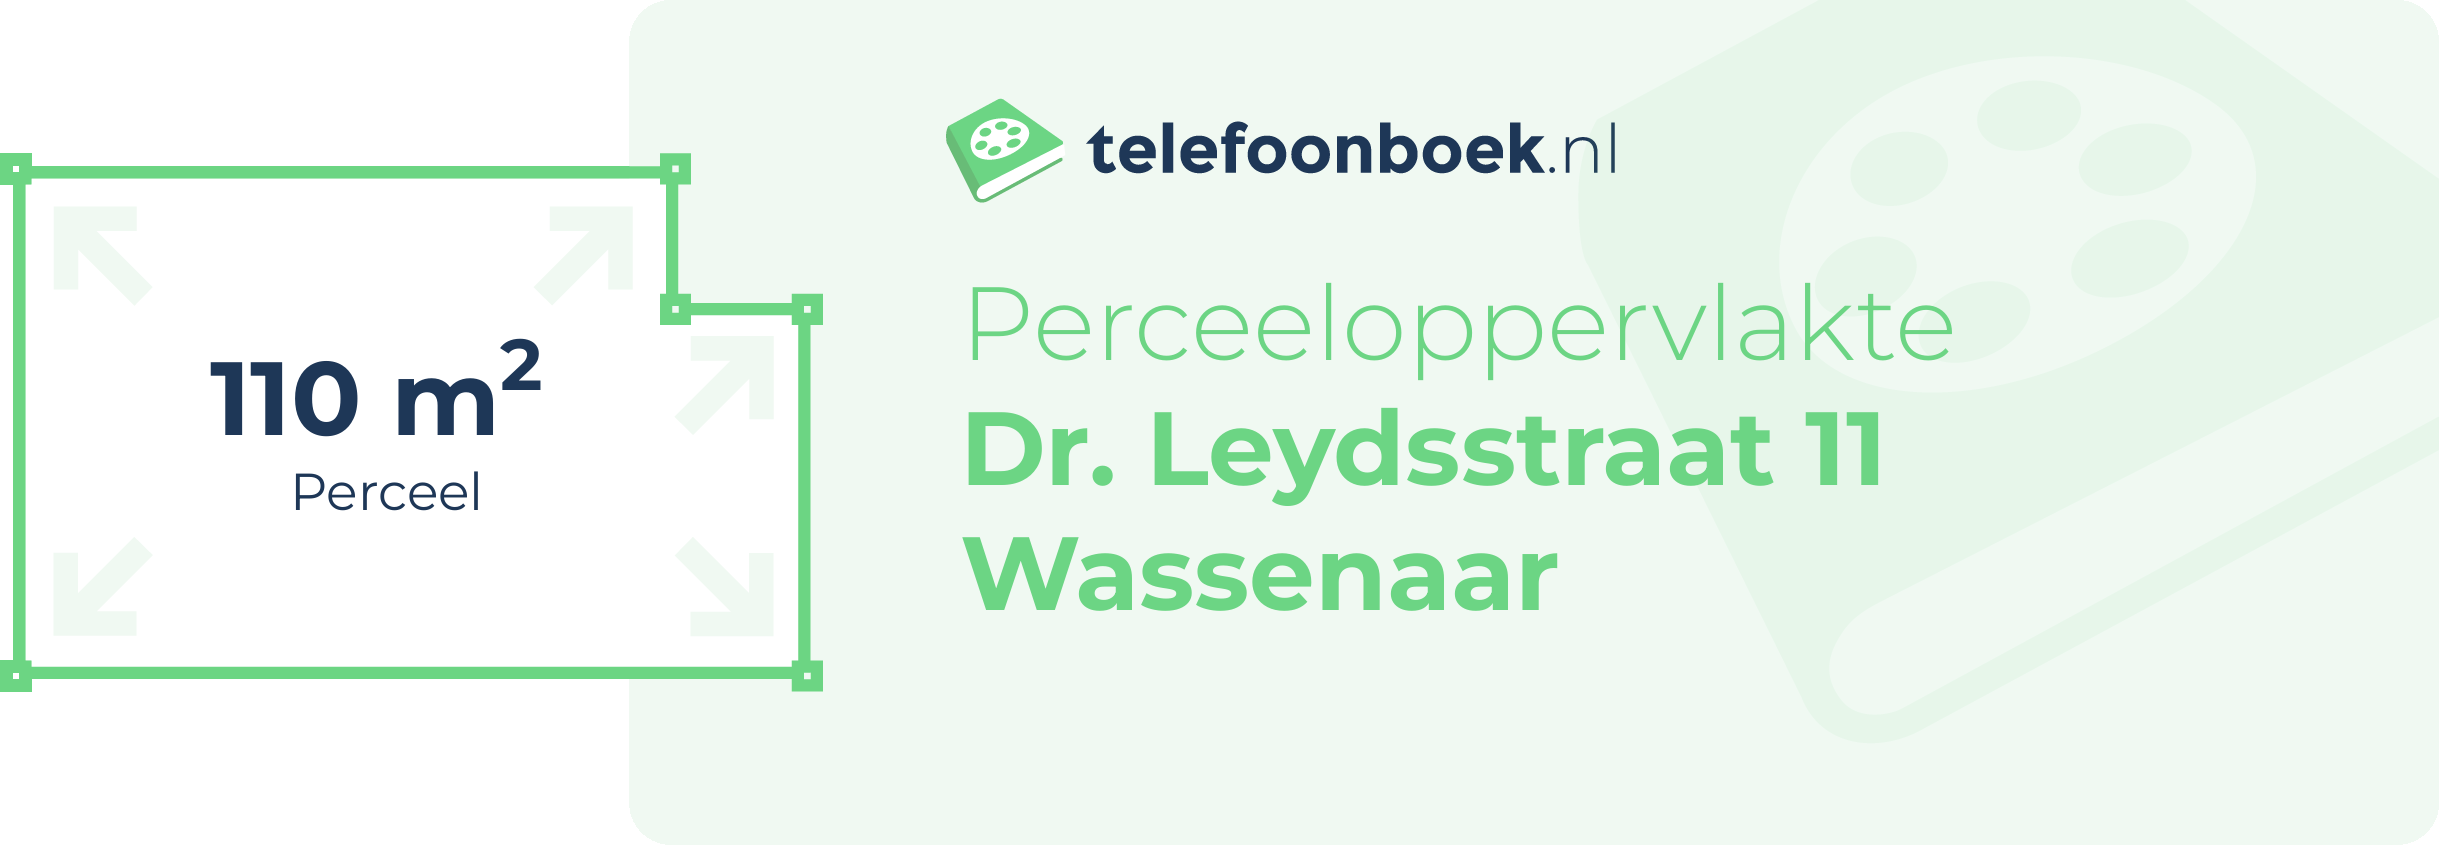 Perceeloppervlakte Dr. Leydsstraat 11 Wassenaar